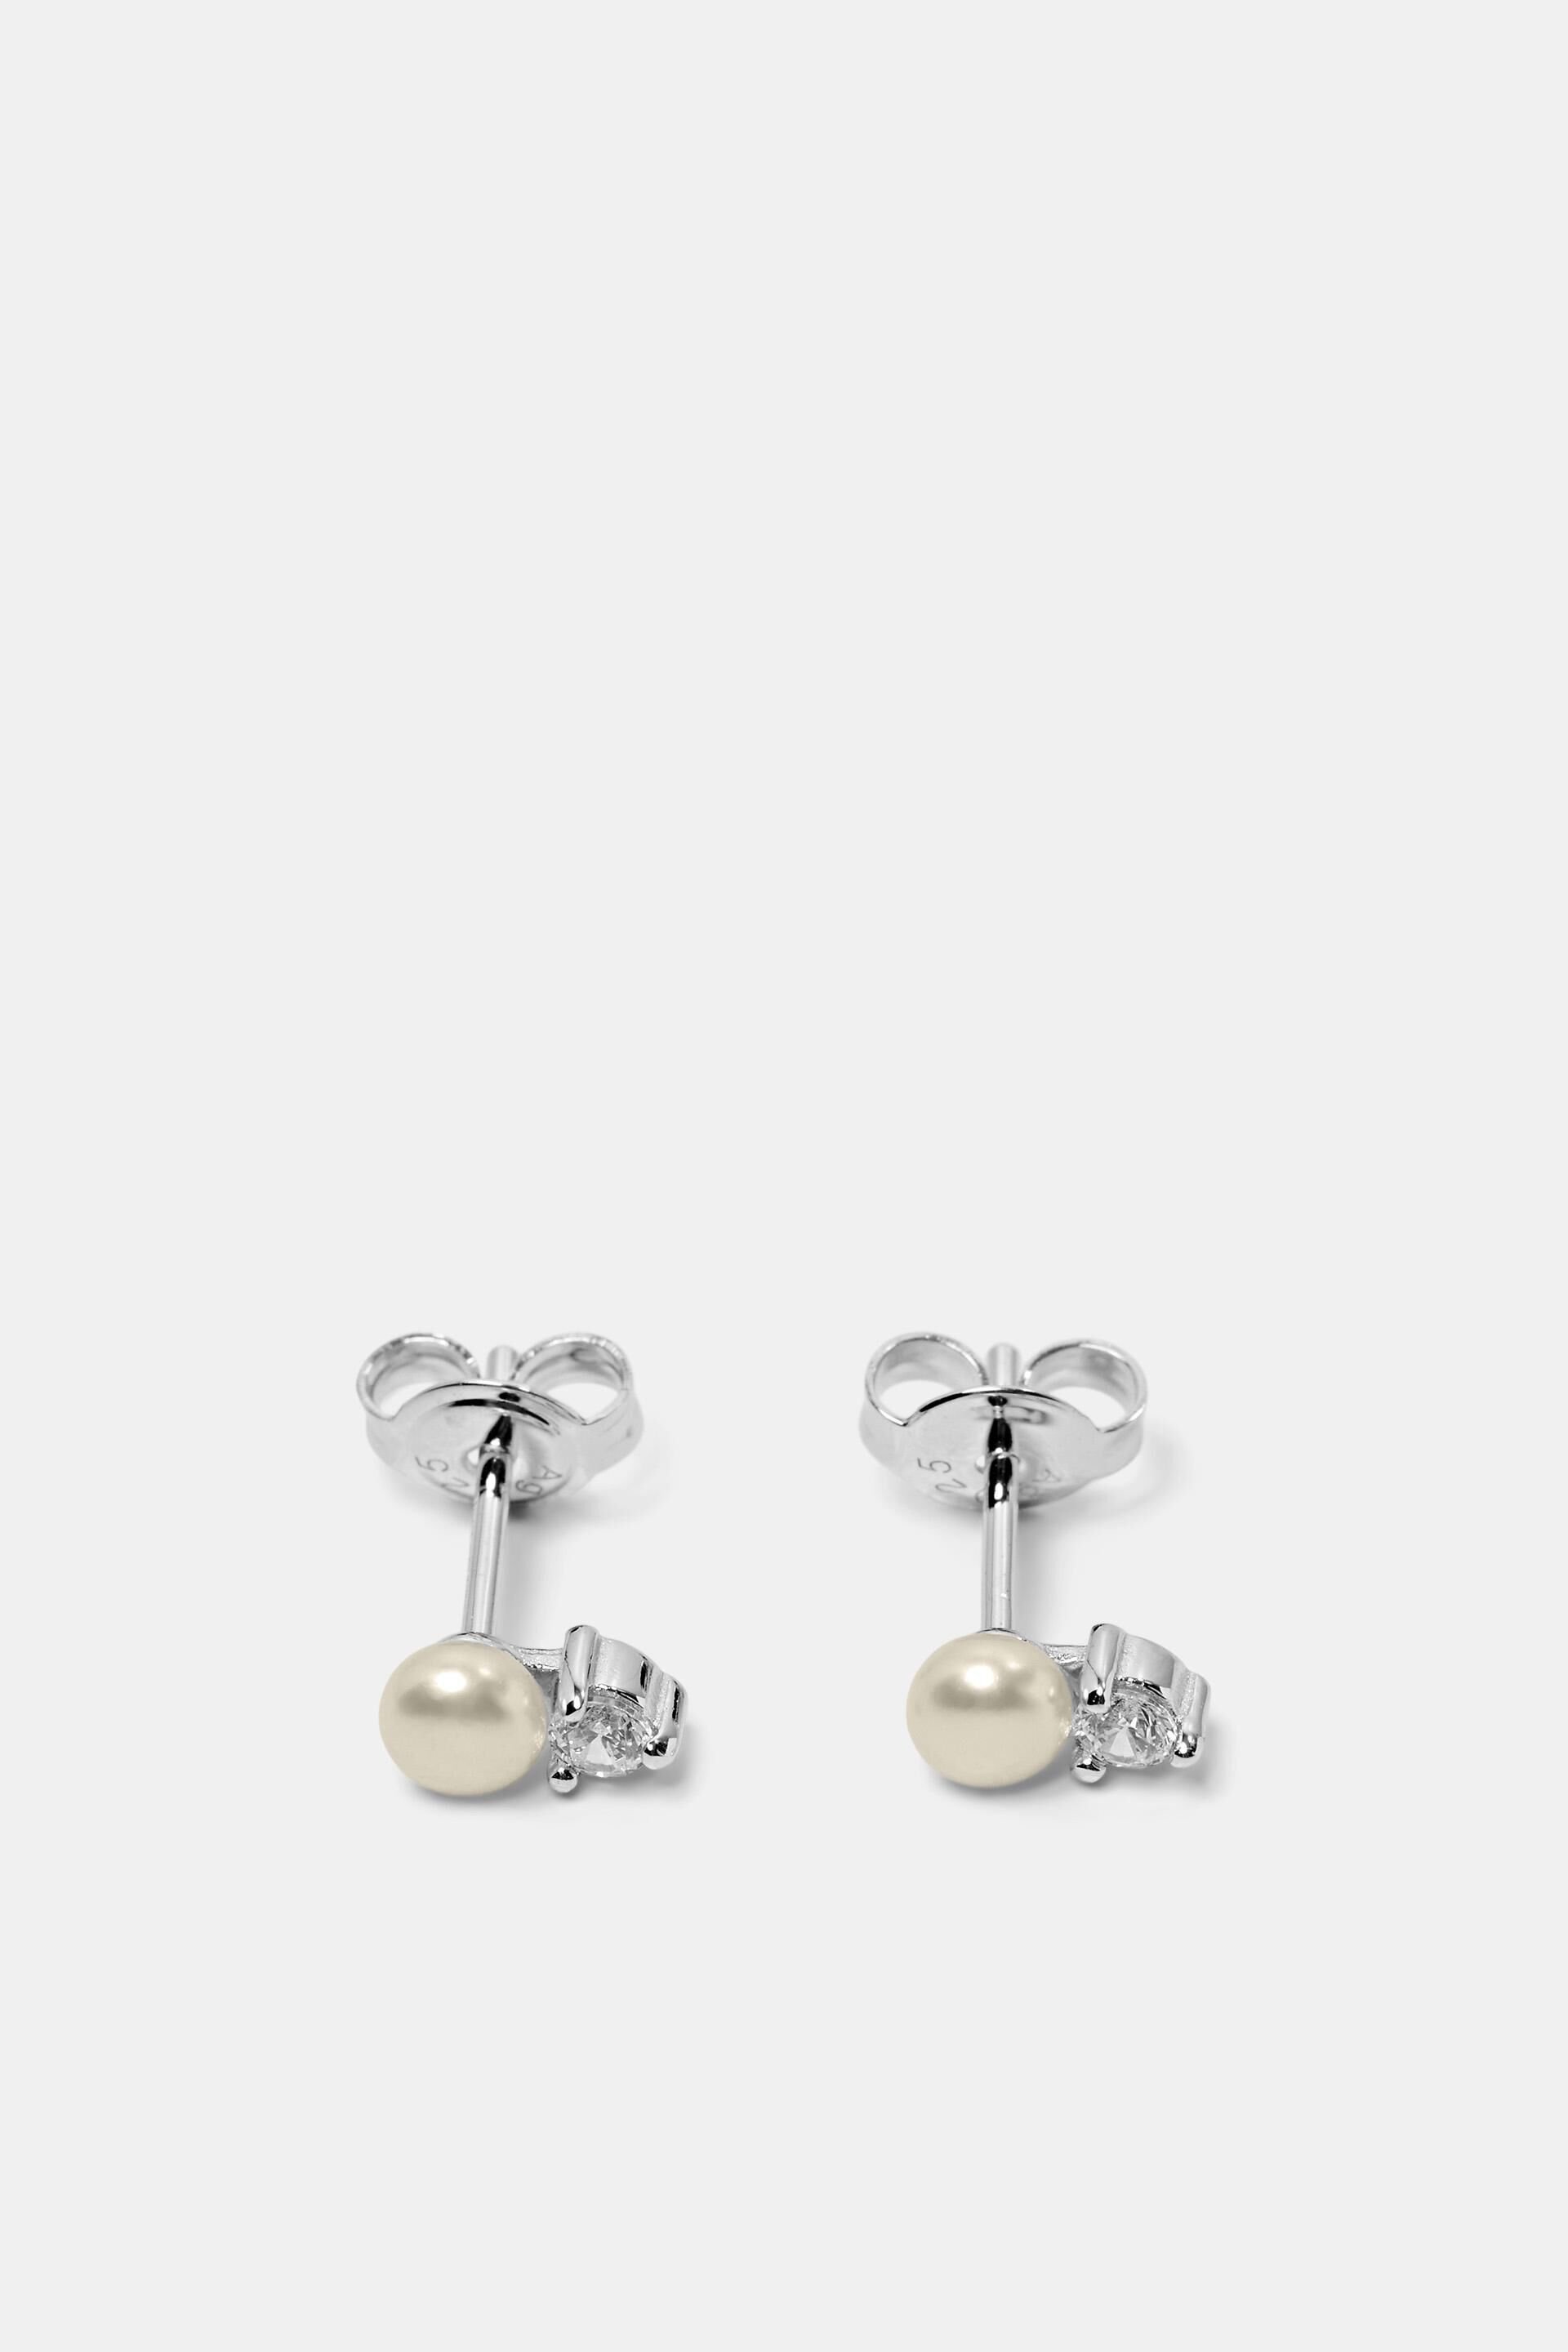 Esprit Online Store Cubic Zirconia Sterling Silver Earrings